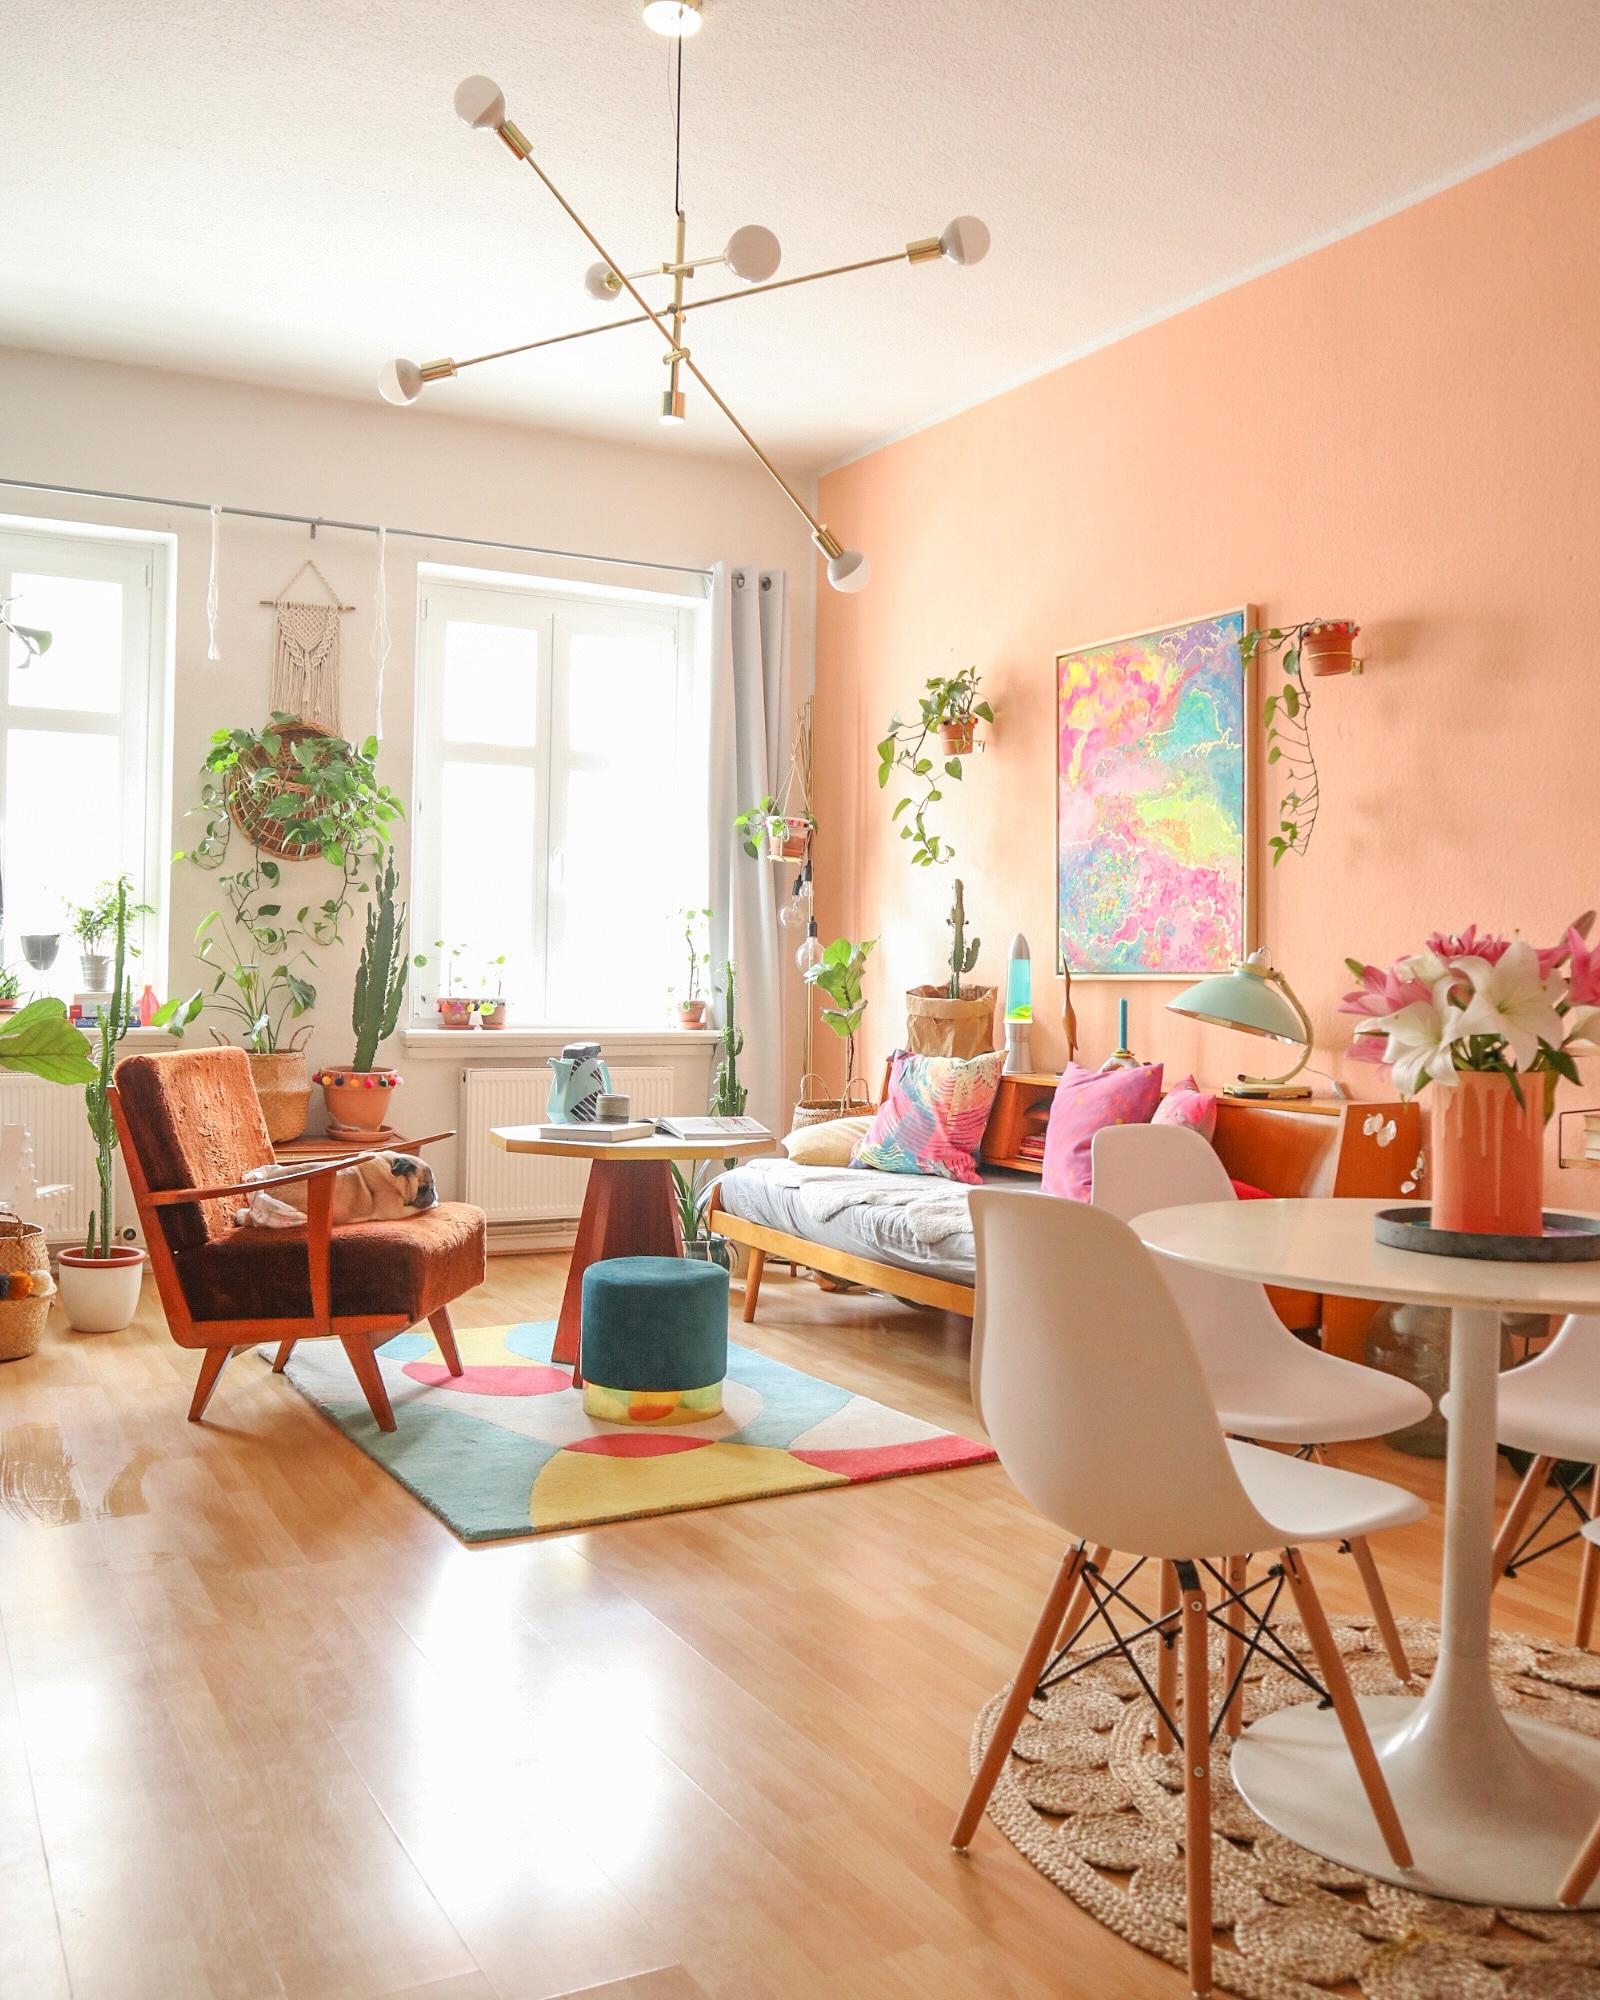 #livingroom #vintagehome #vintagefurniture #colorful